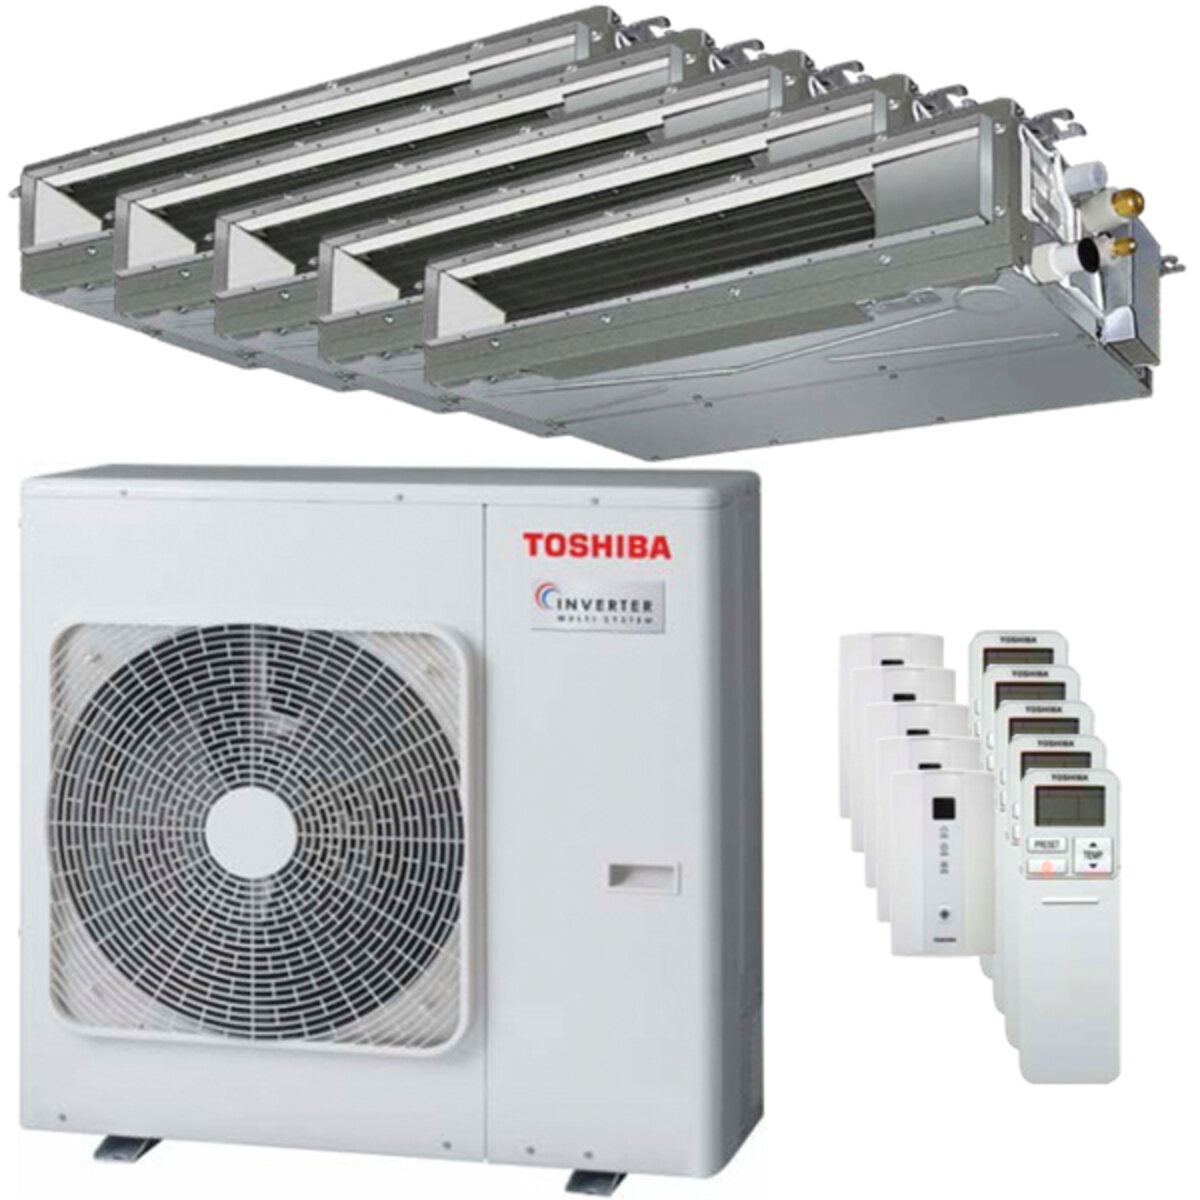 Toshiba Ductable Air Conditioner U2 penta split 9000 + 9000 + 9000 + 12000 + 16000 BTU inverter A ++ outdoor unit 10.0 kW